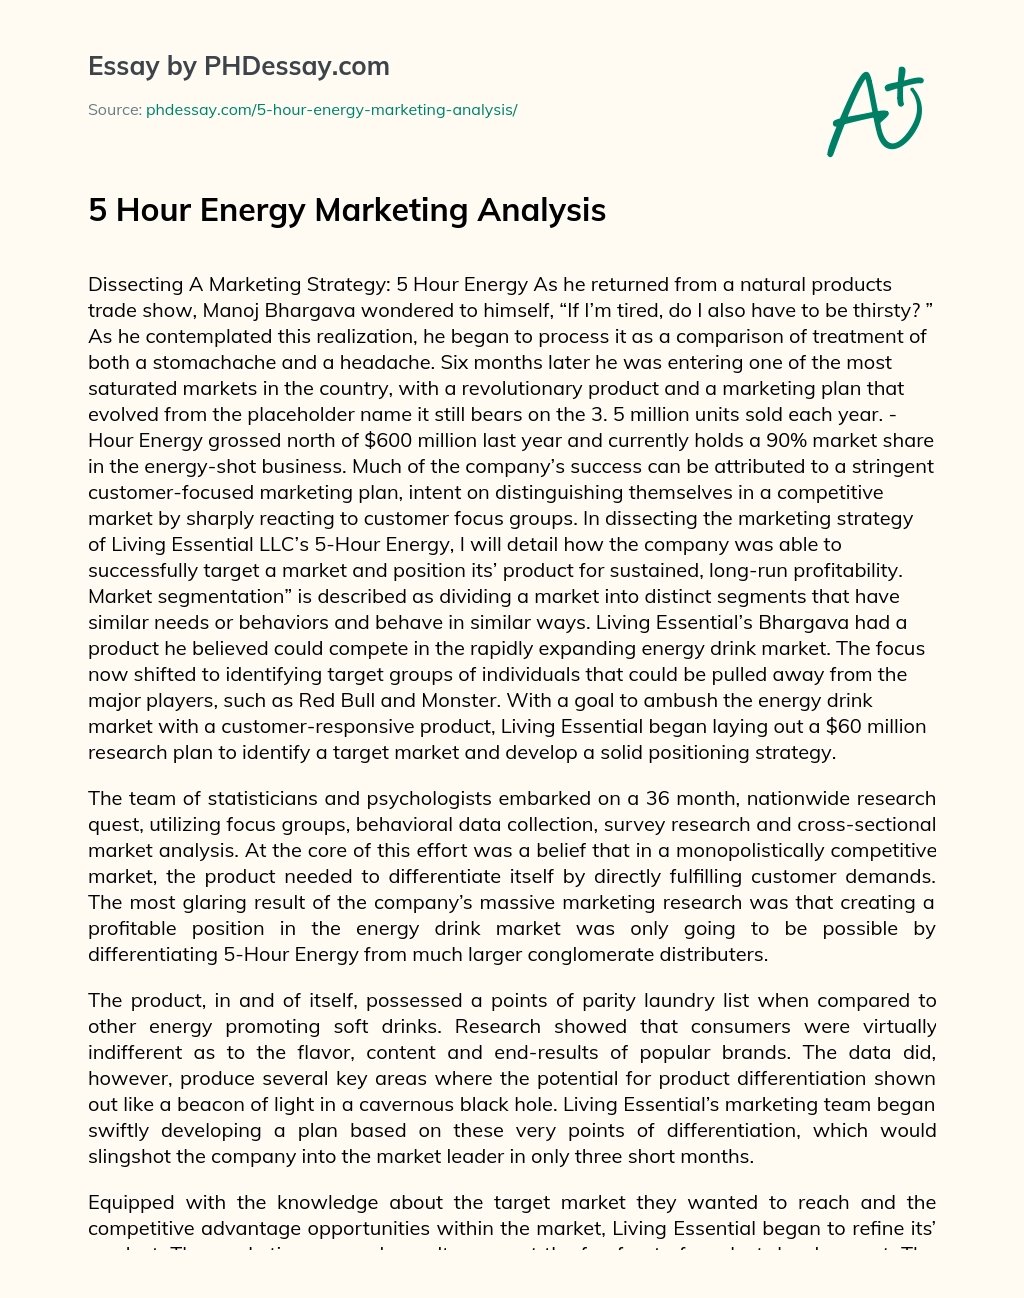 5 Hour Energy Marketing Analysis essay